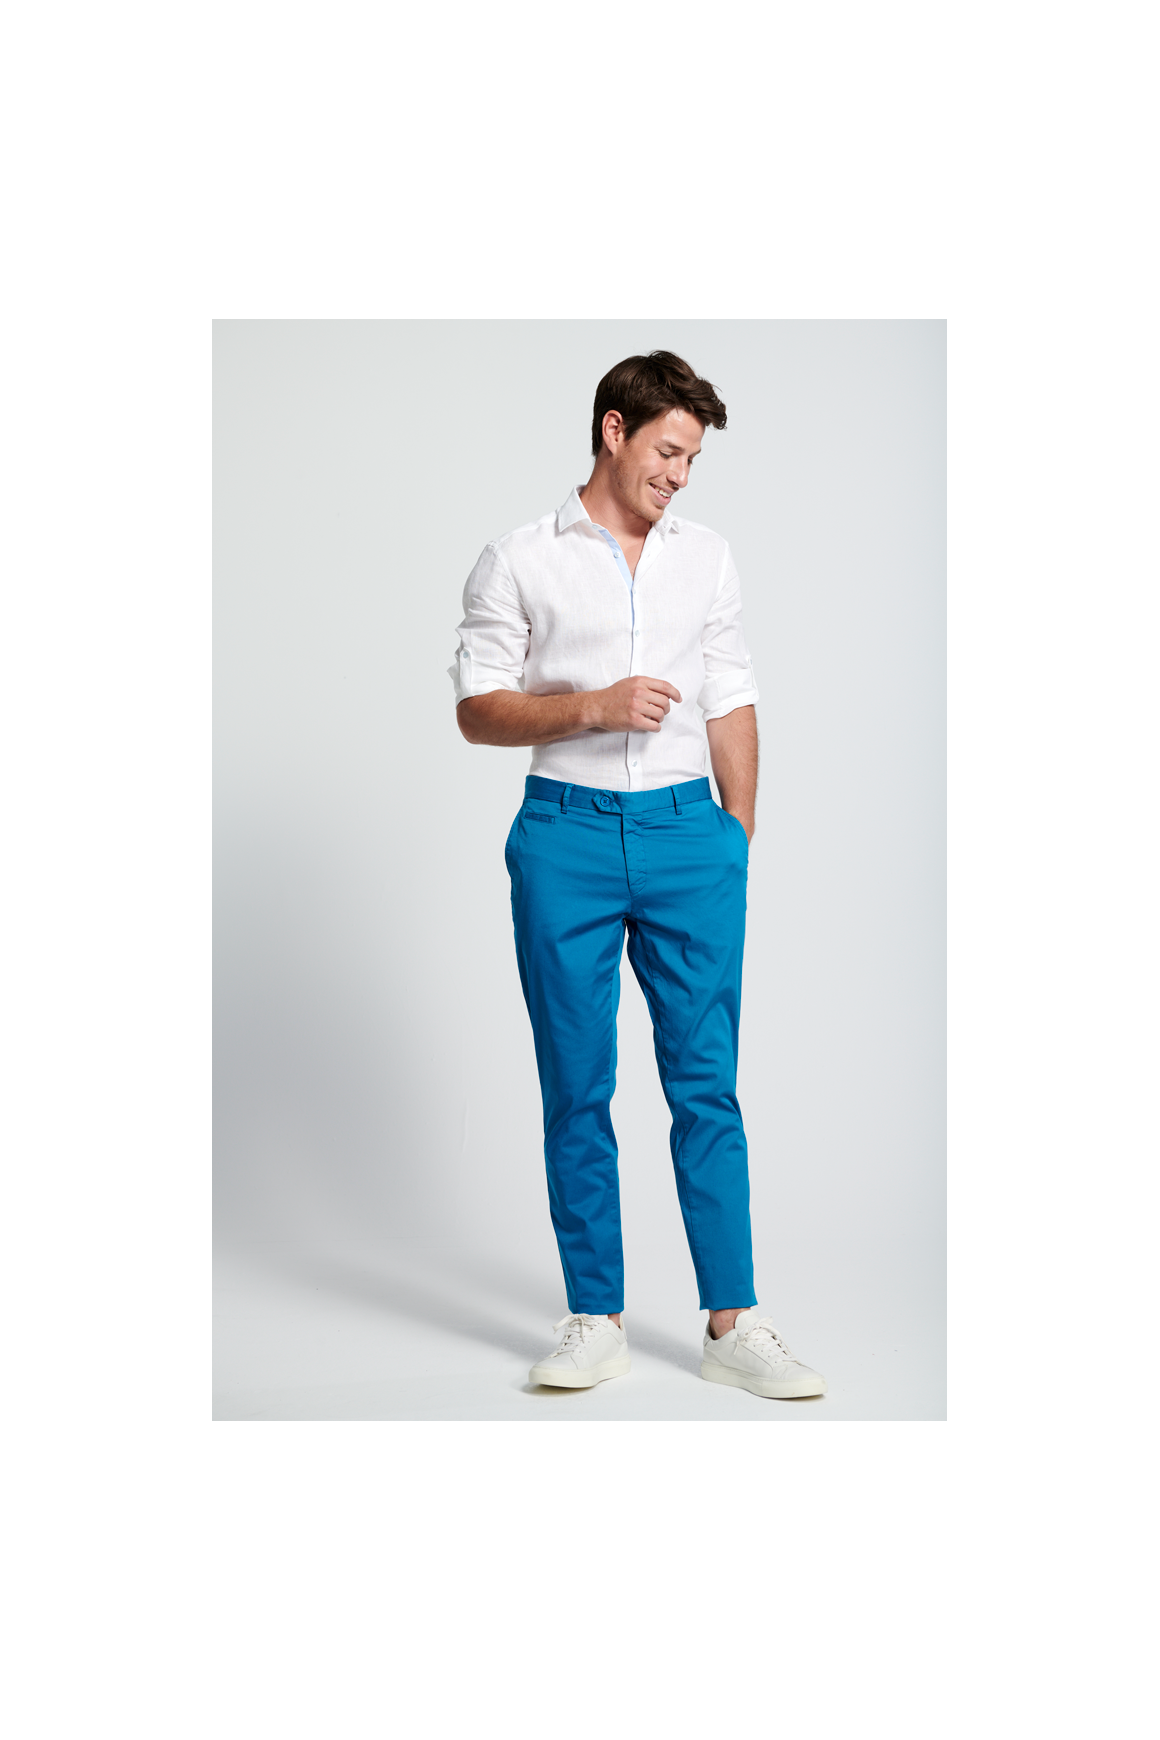 Achat Pantalon Riviera Turquoise